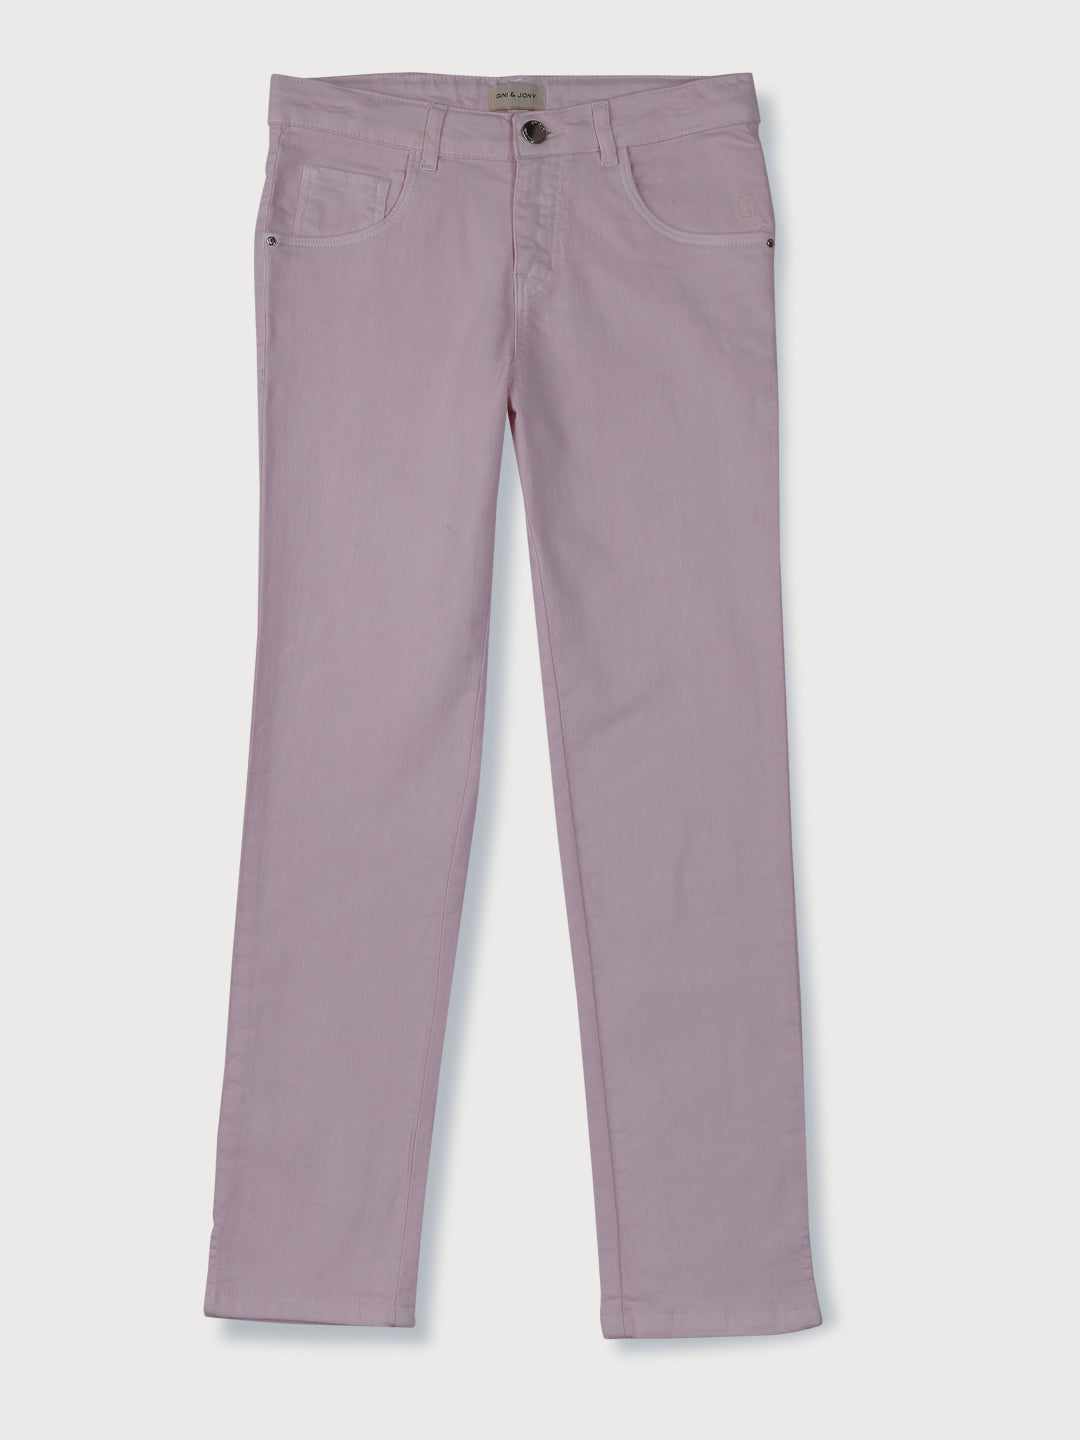 Girls Purple Solid Cotton Jeans